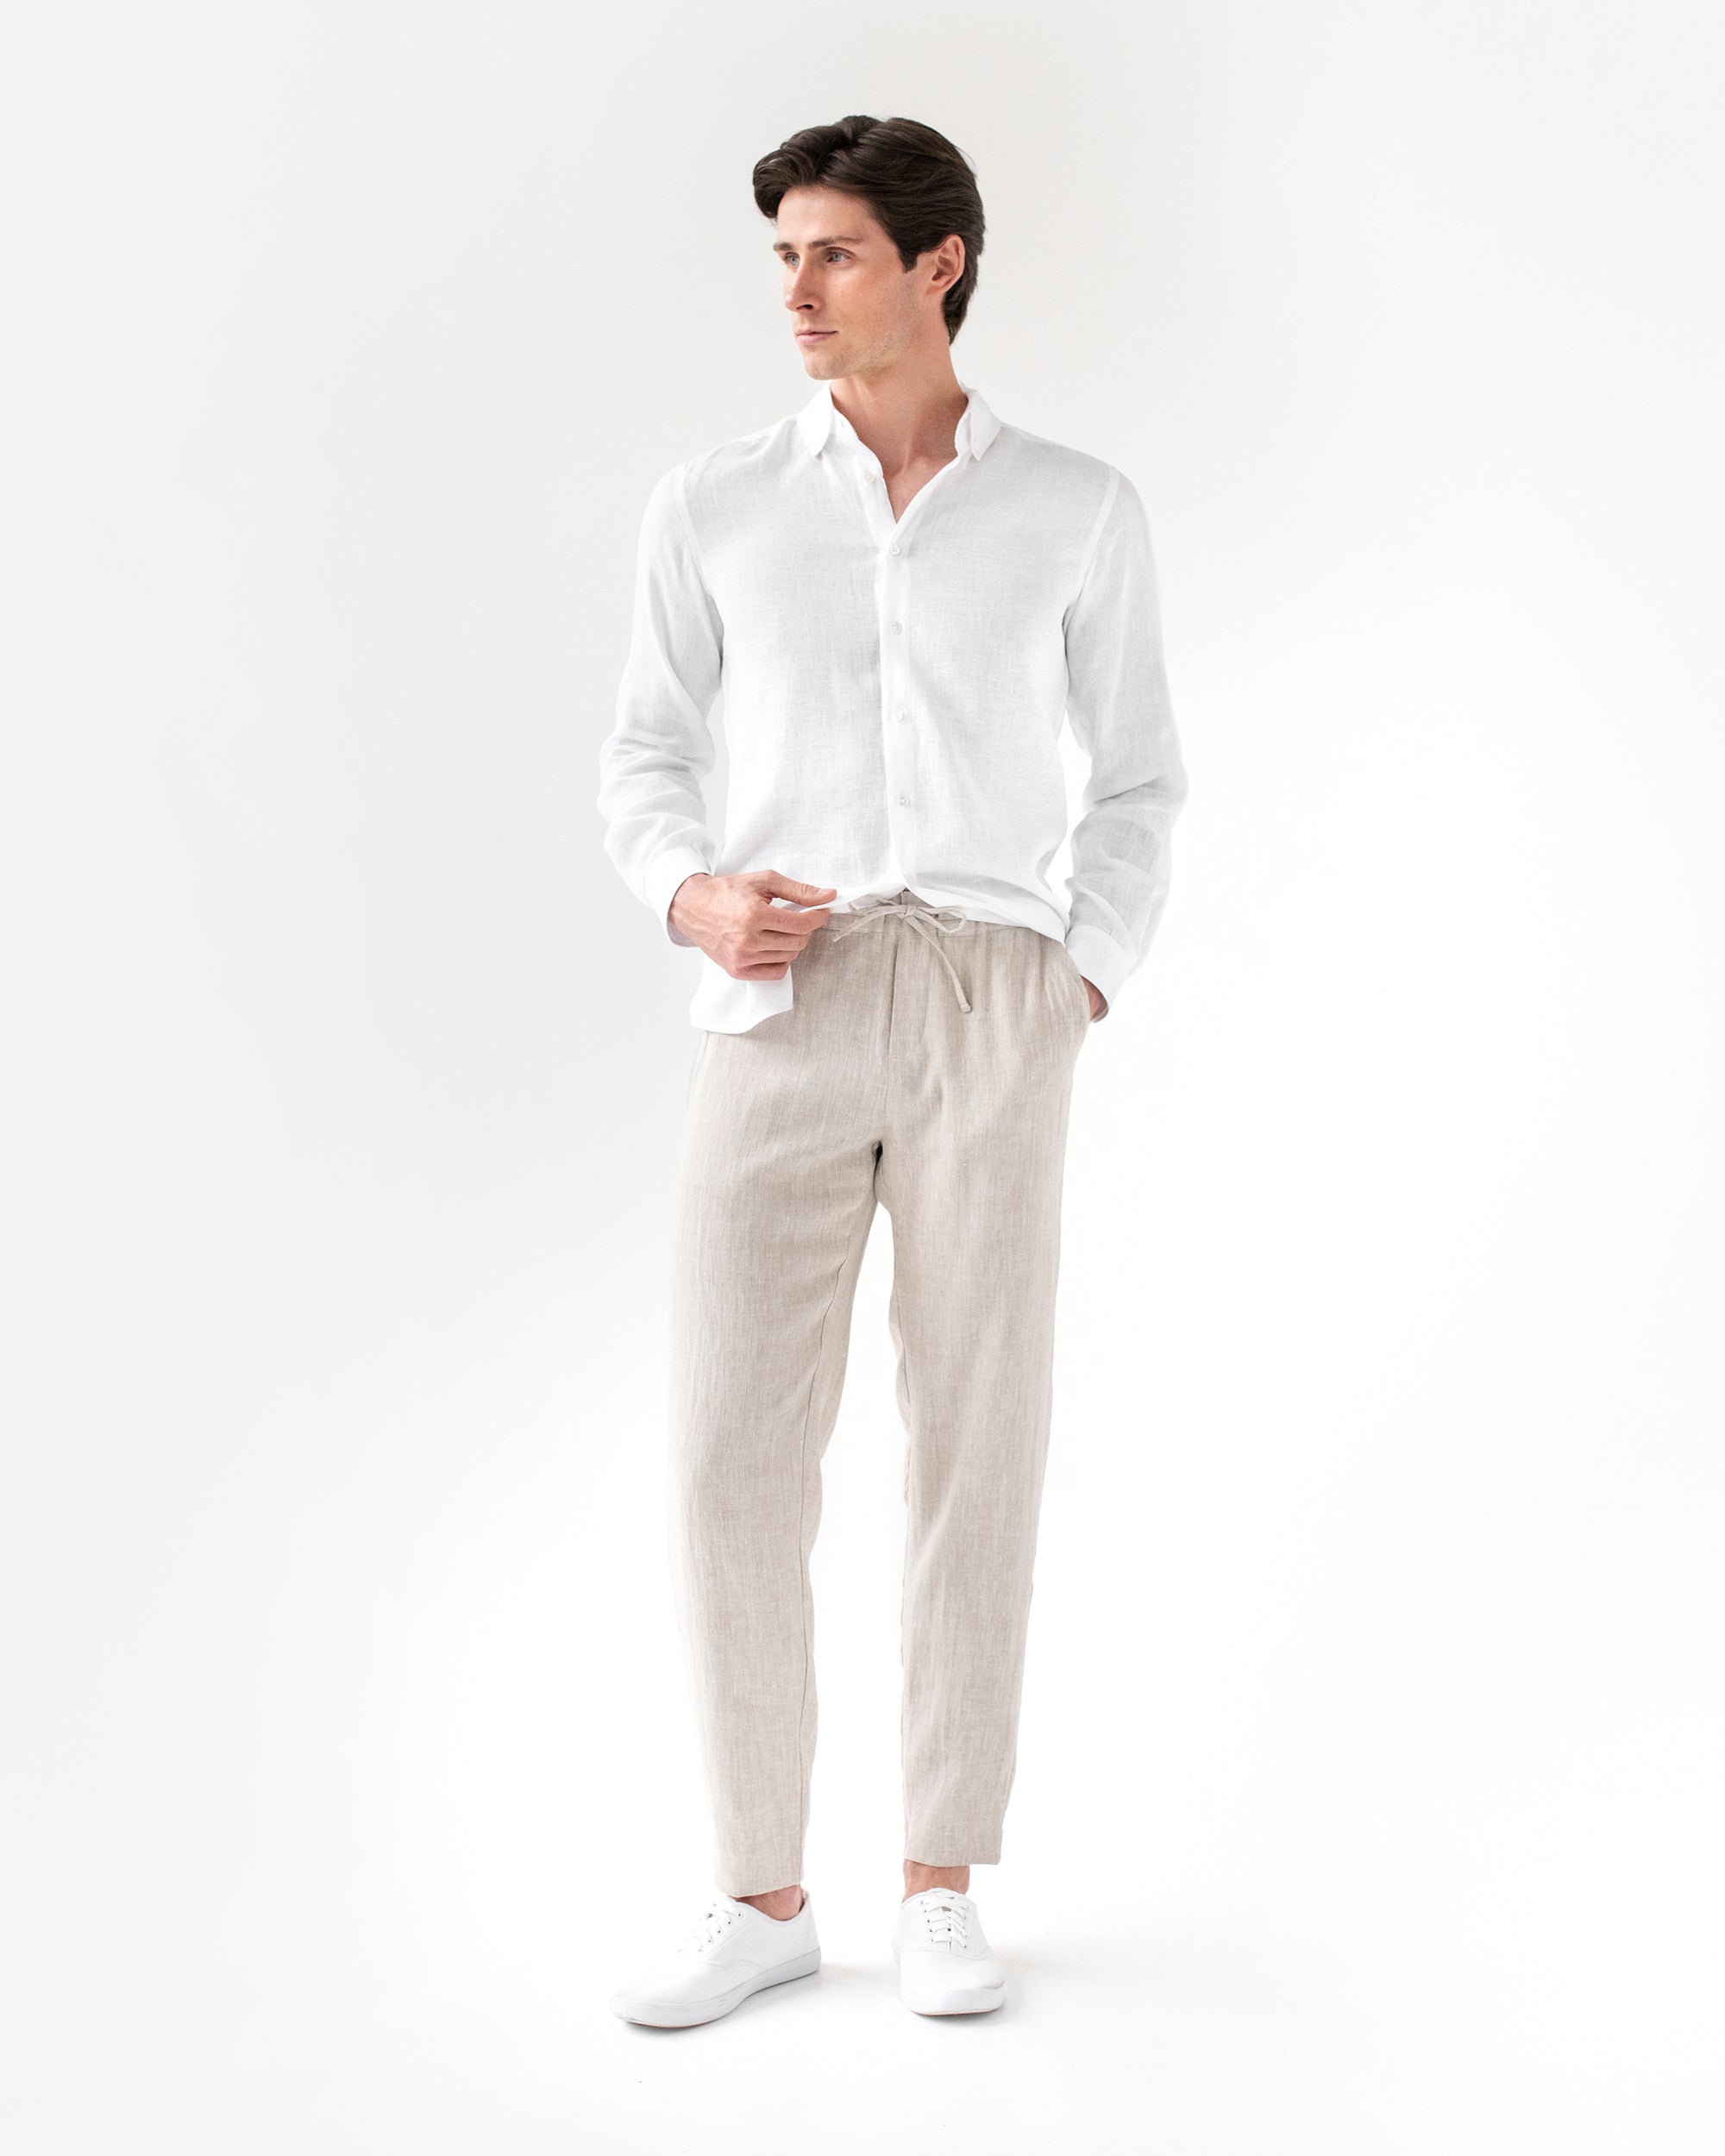 Carter - Men's Linen Pants | Ably Apparel